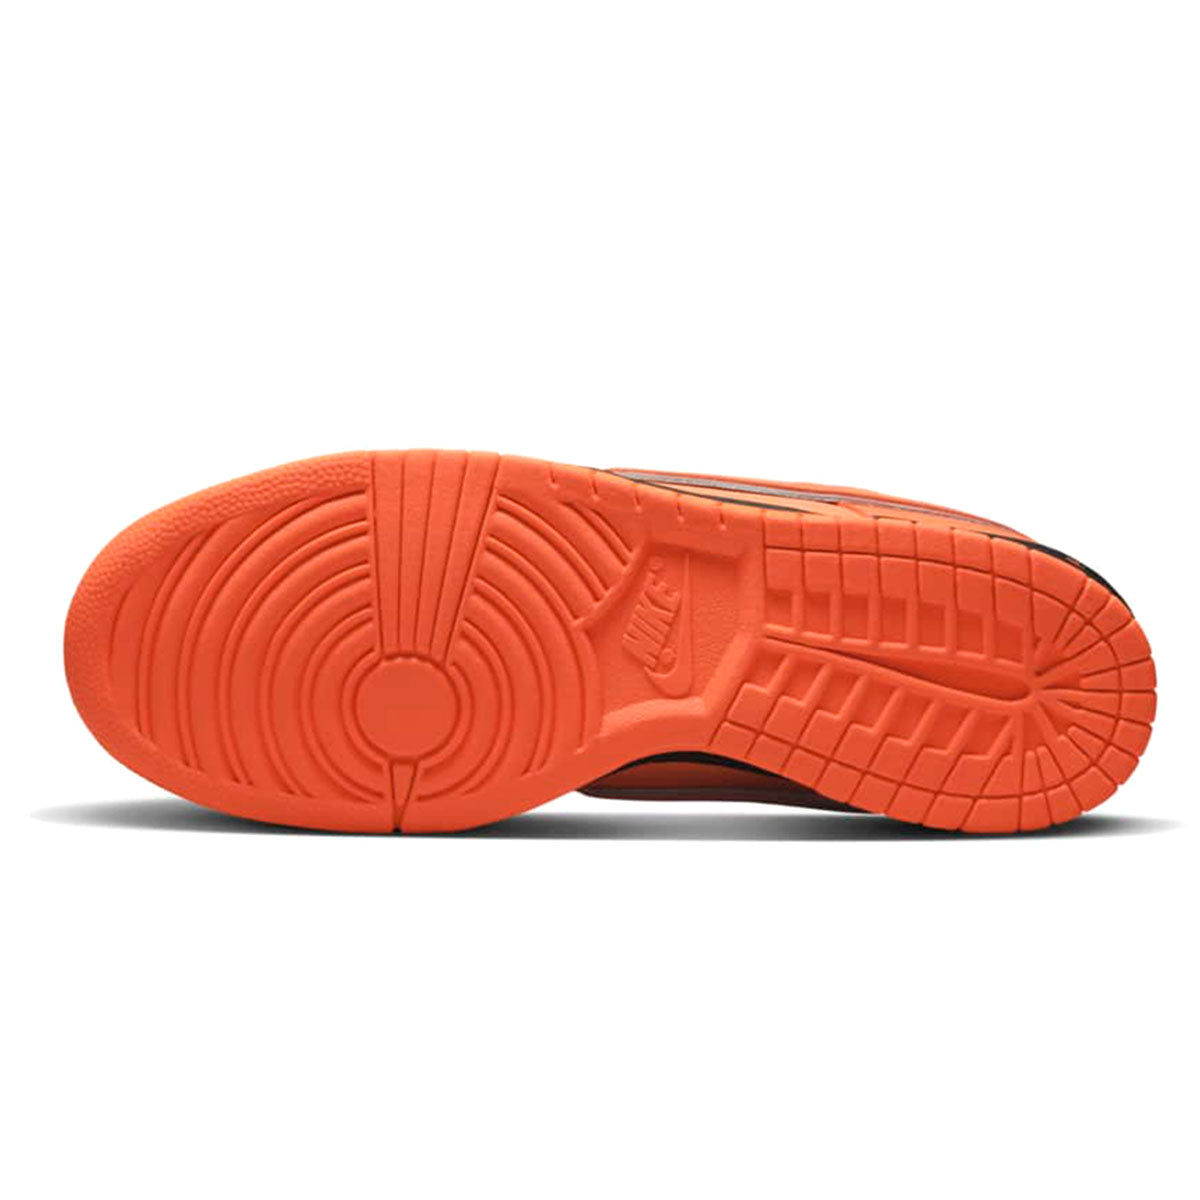 240107017-1 FD8776-800 Concepts × Nike SB Dunk Low SP “橘色龍蝦”